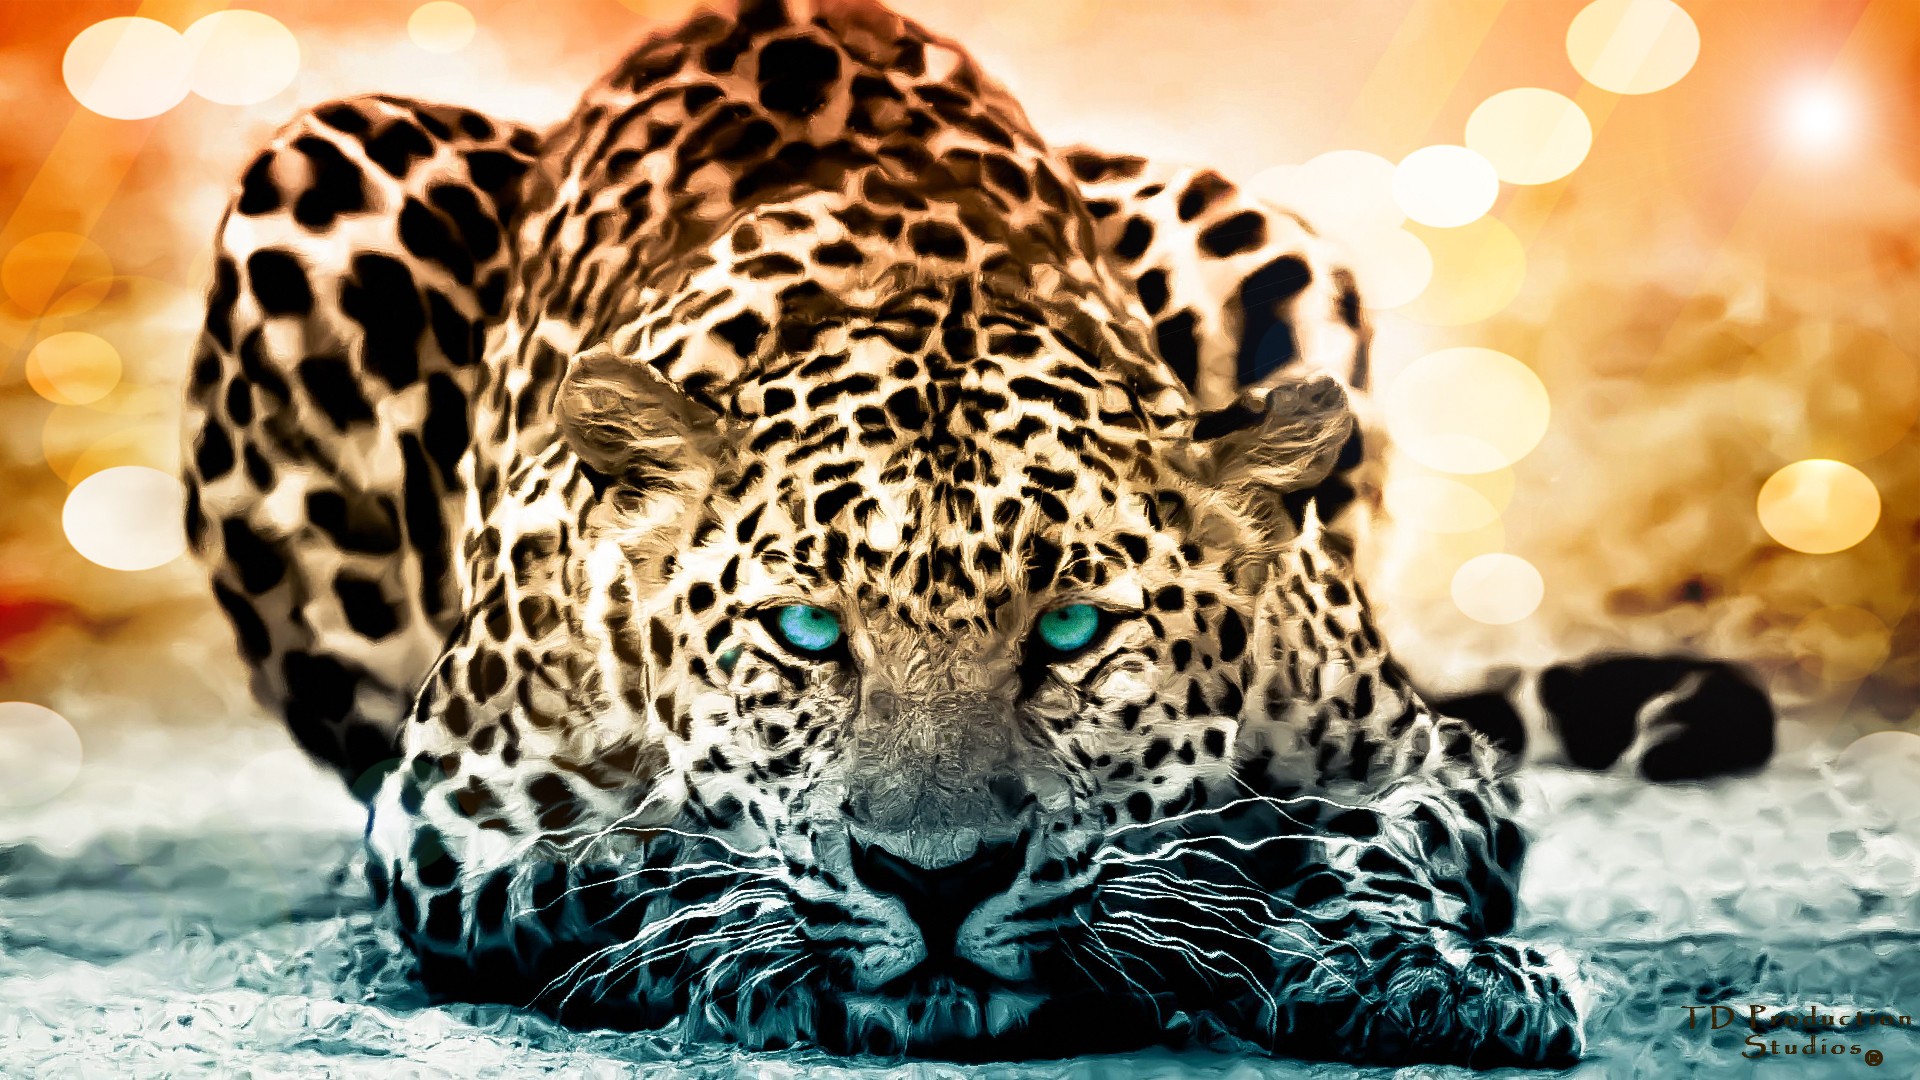 159 Jaguar HD Wallpapers | Backgrounds - Wallpaper Abyss